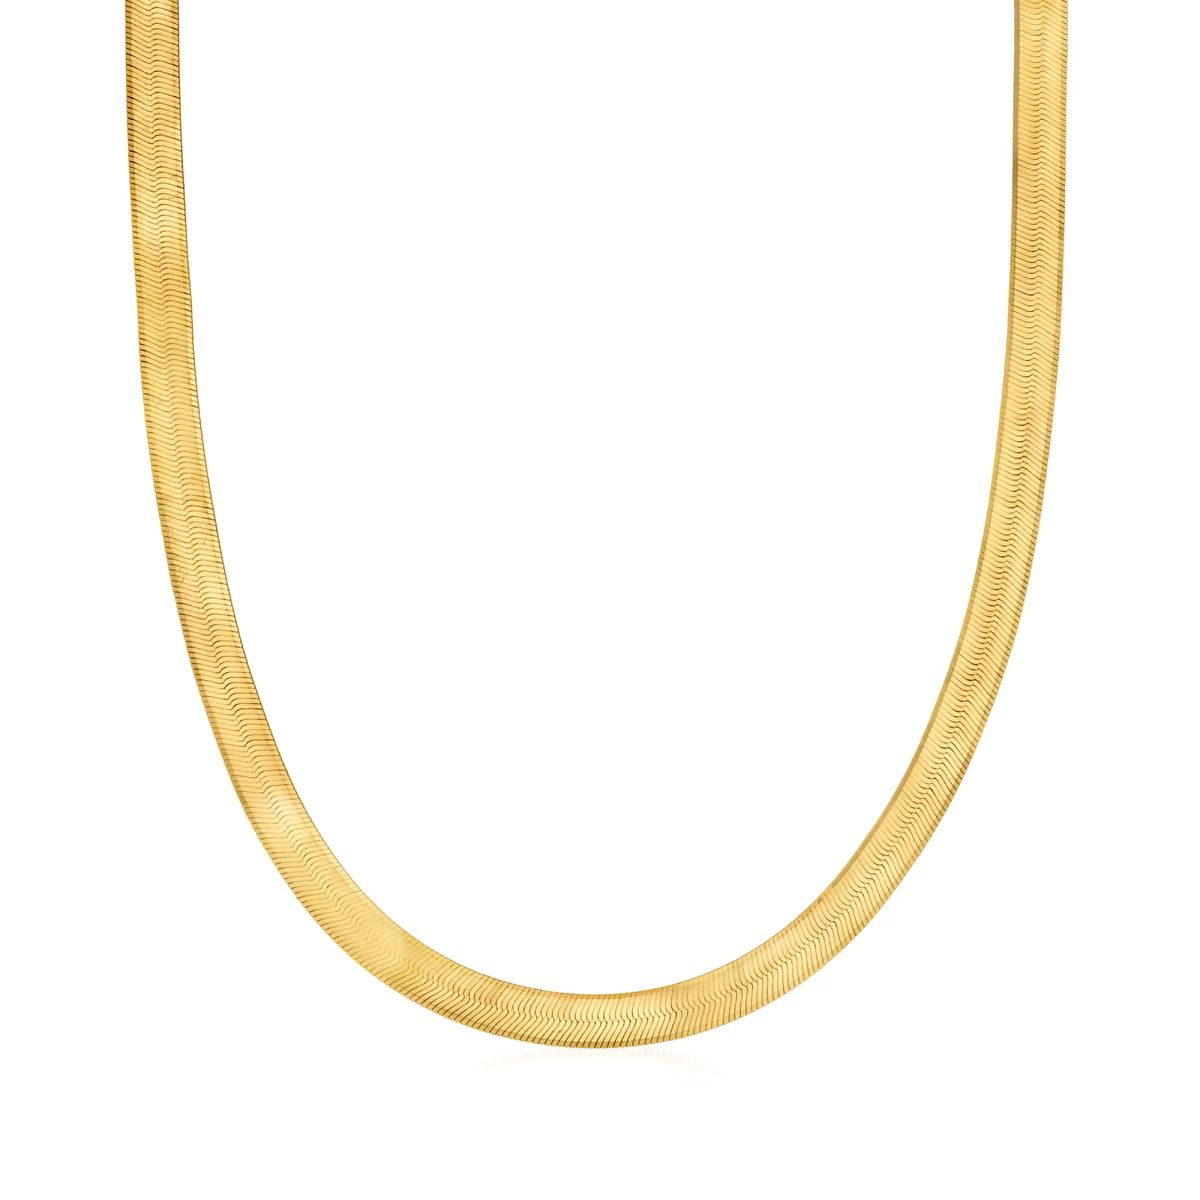 6mm 14kt Yellow Gold Herringbone Necklace. 16" | Ross-Simons